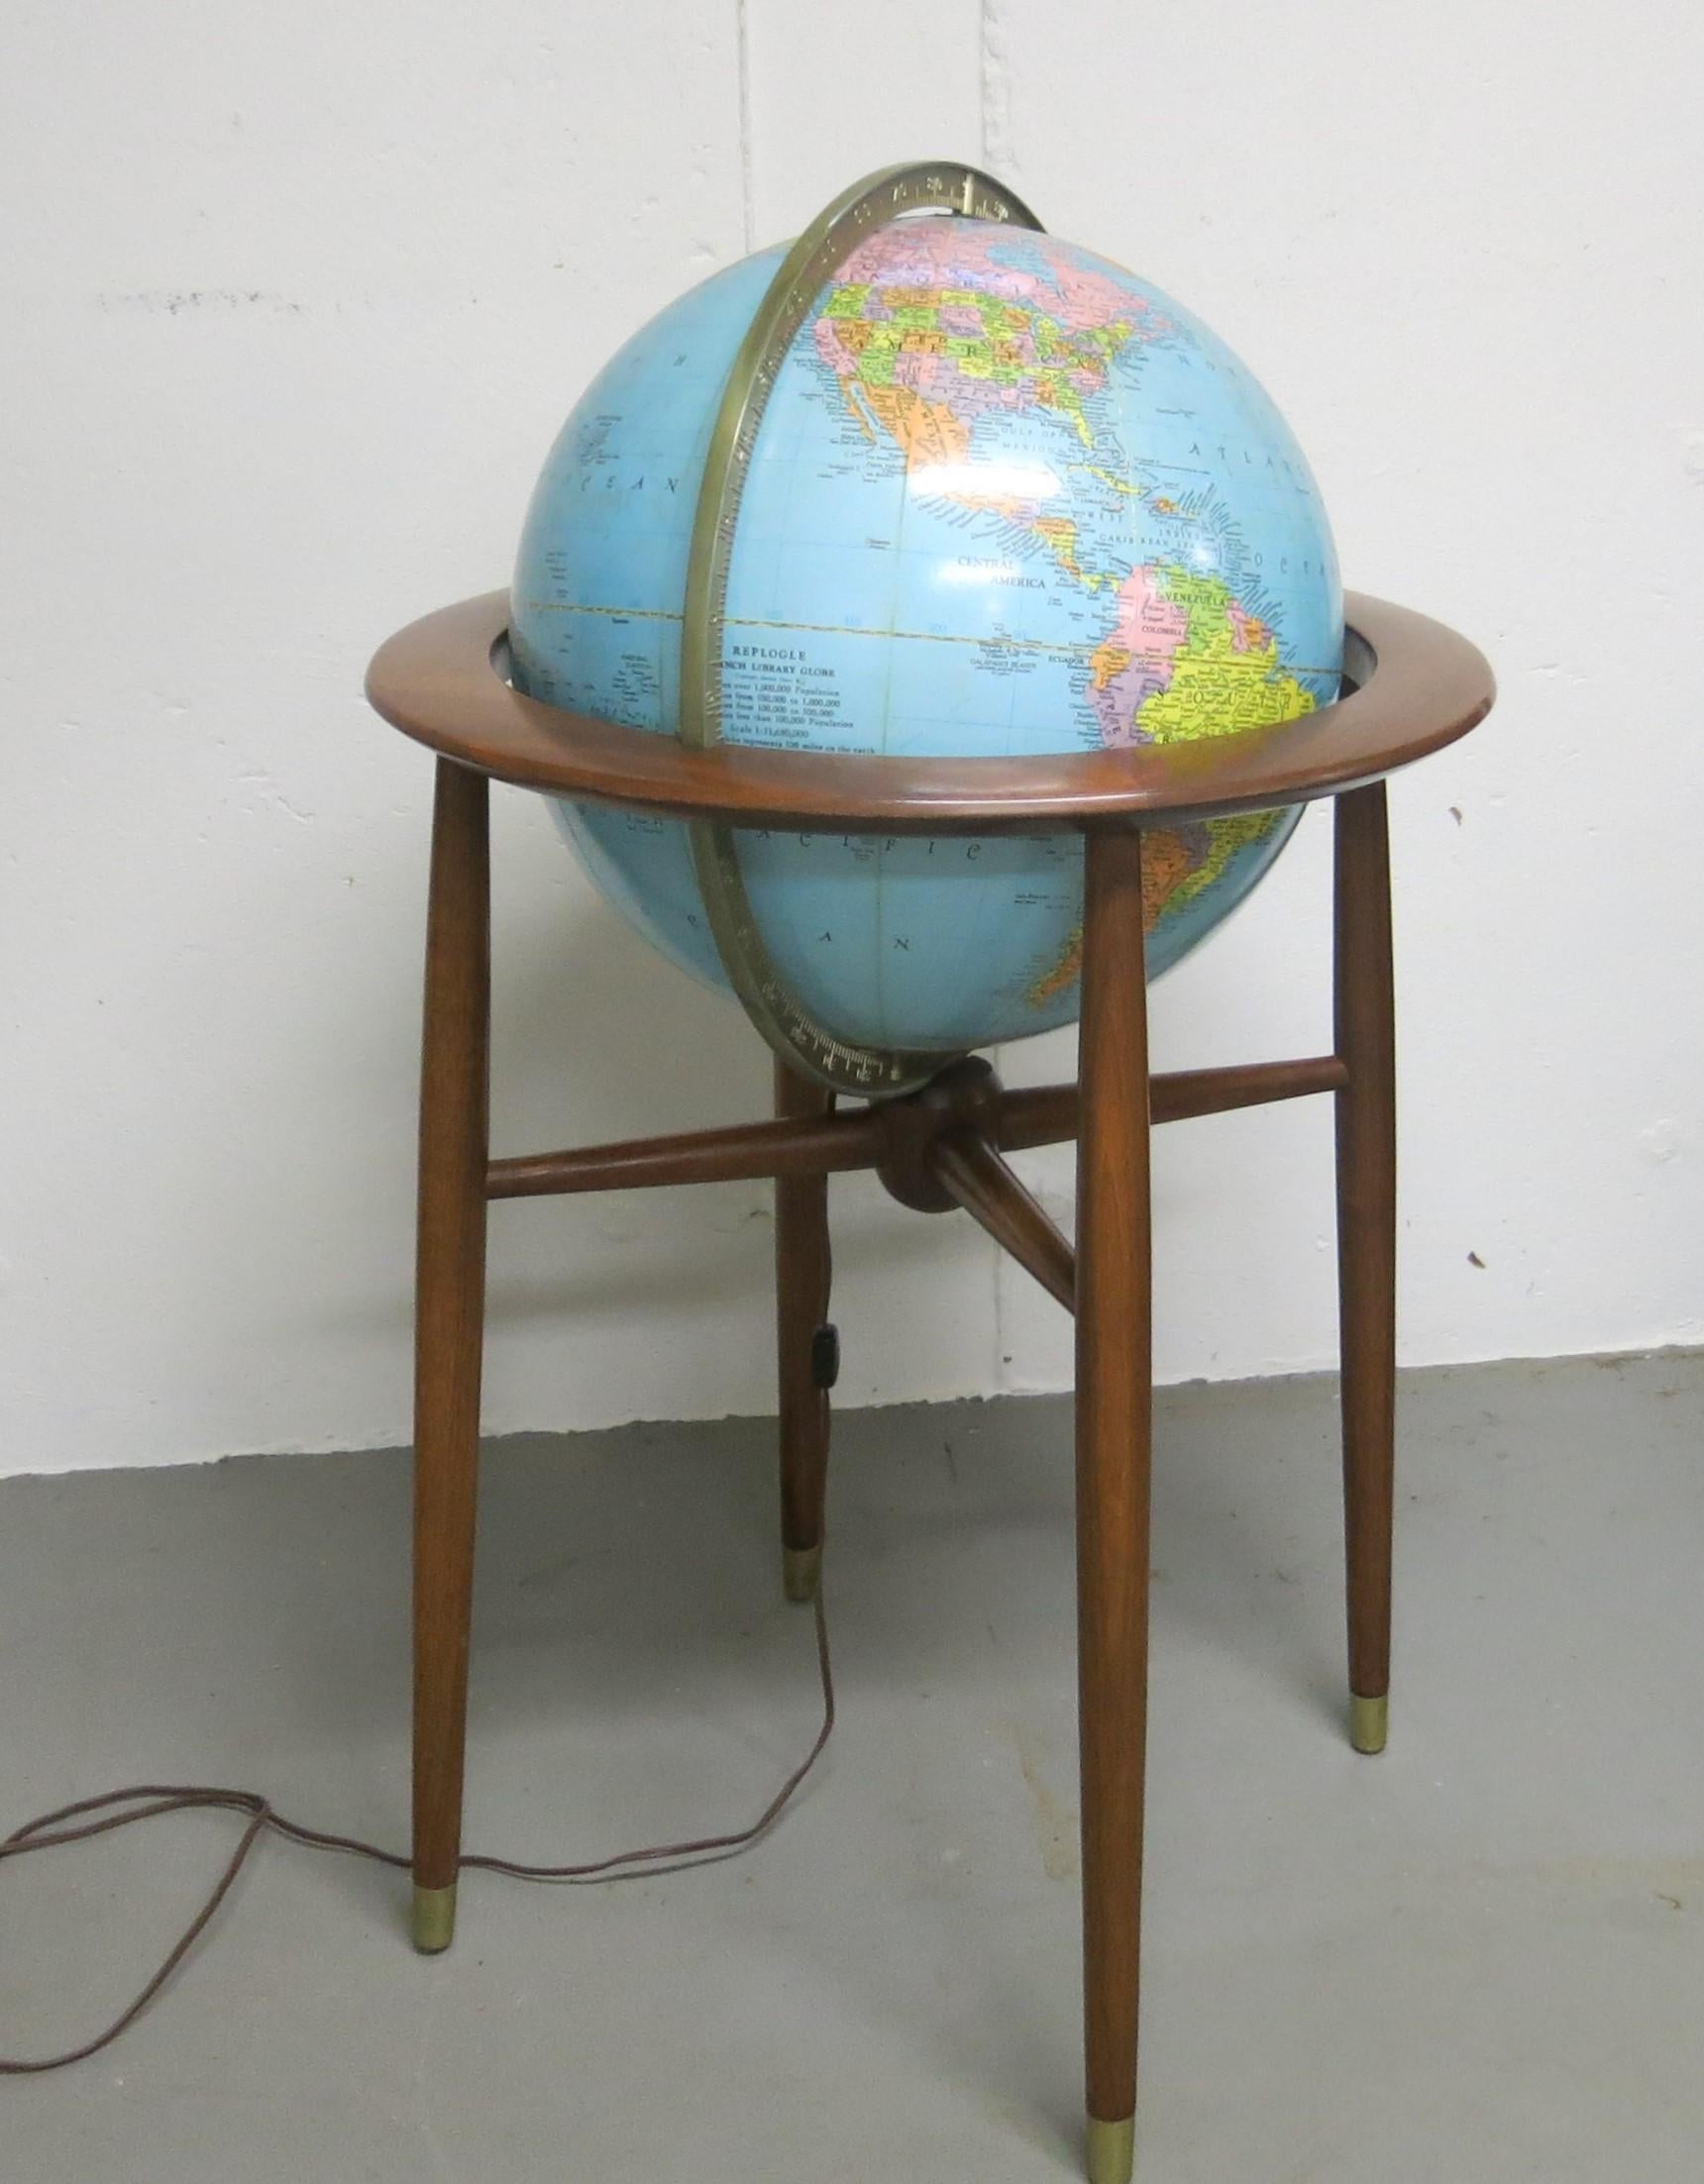 Great looking Replogle globe on wood stand. Globe is 16